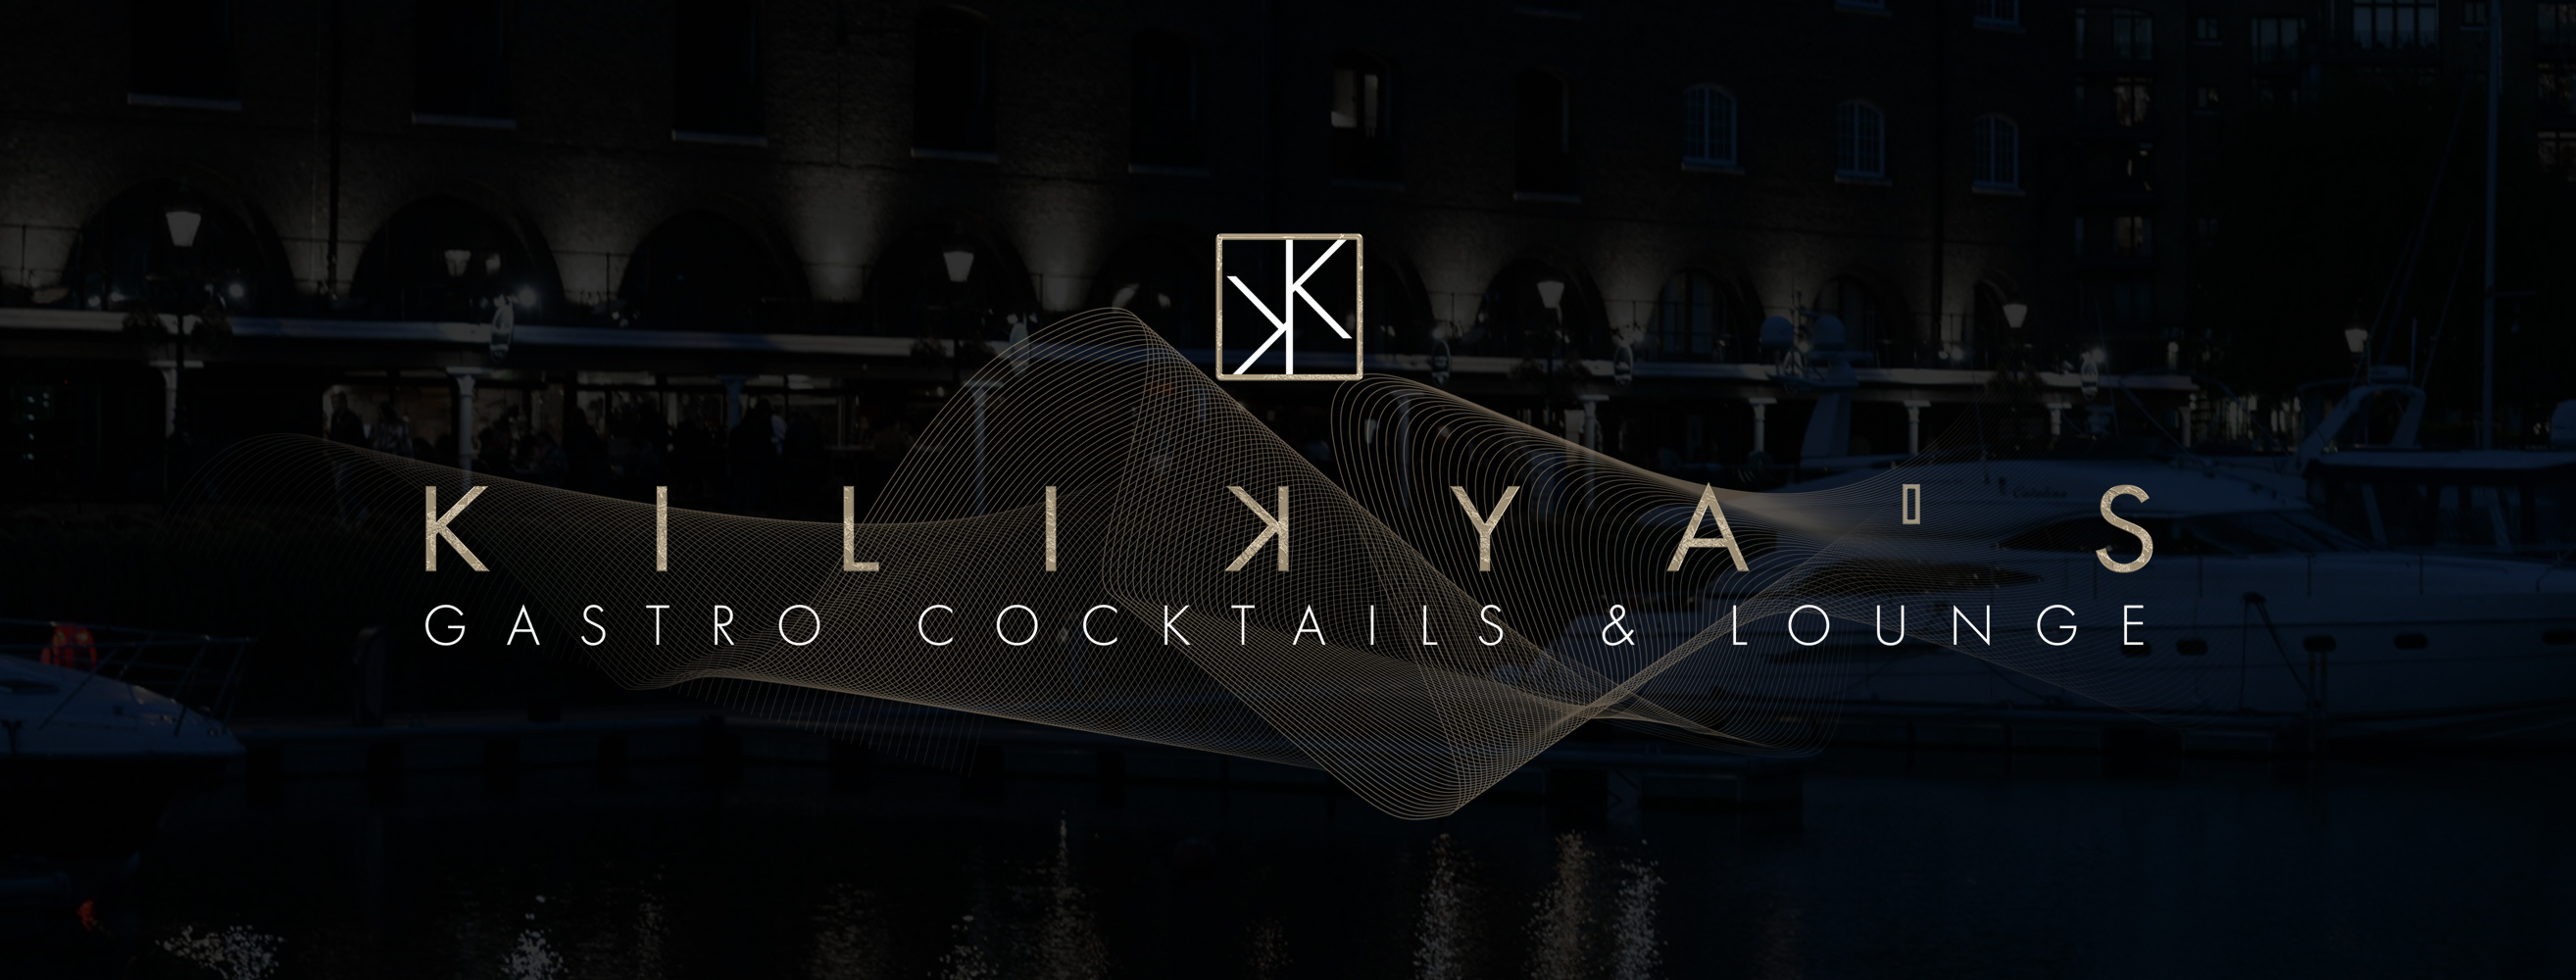 Kilikya’s Gastro,Cocktails & Lounge